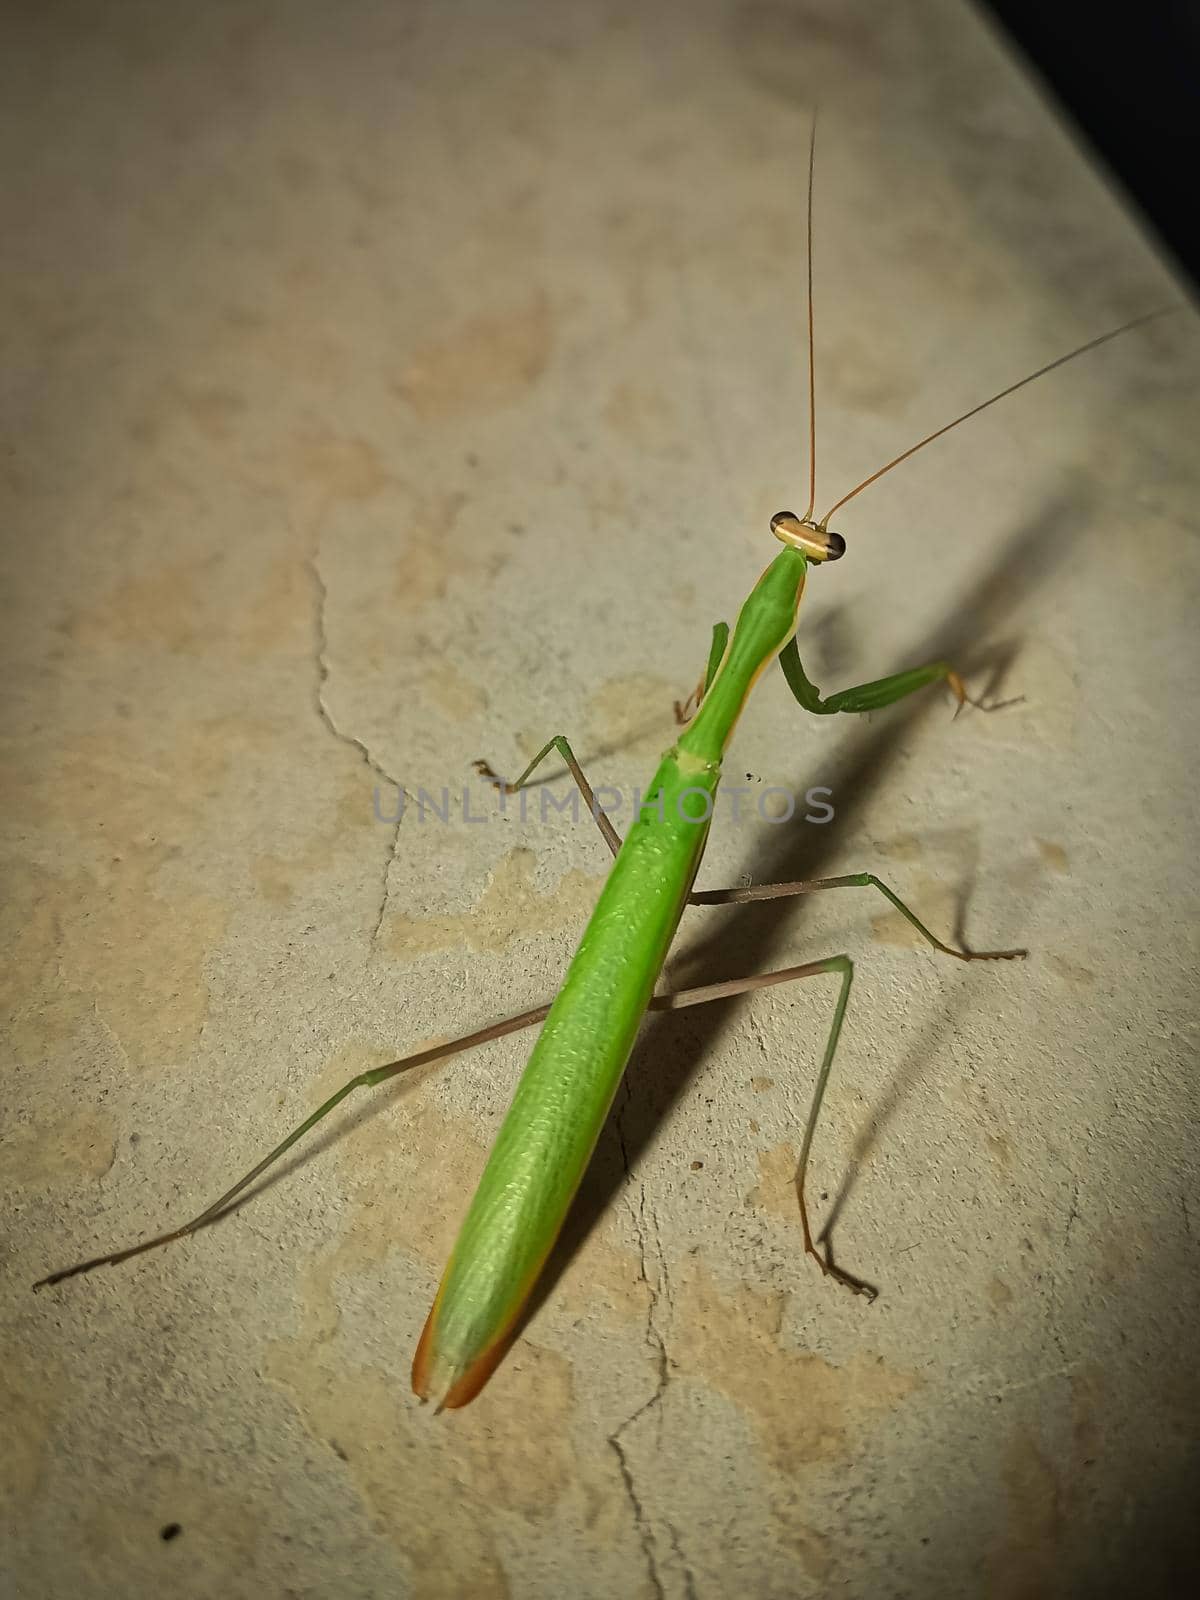 Closeup shot of a green common praying mantis